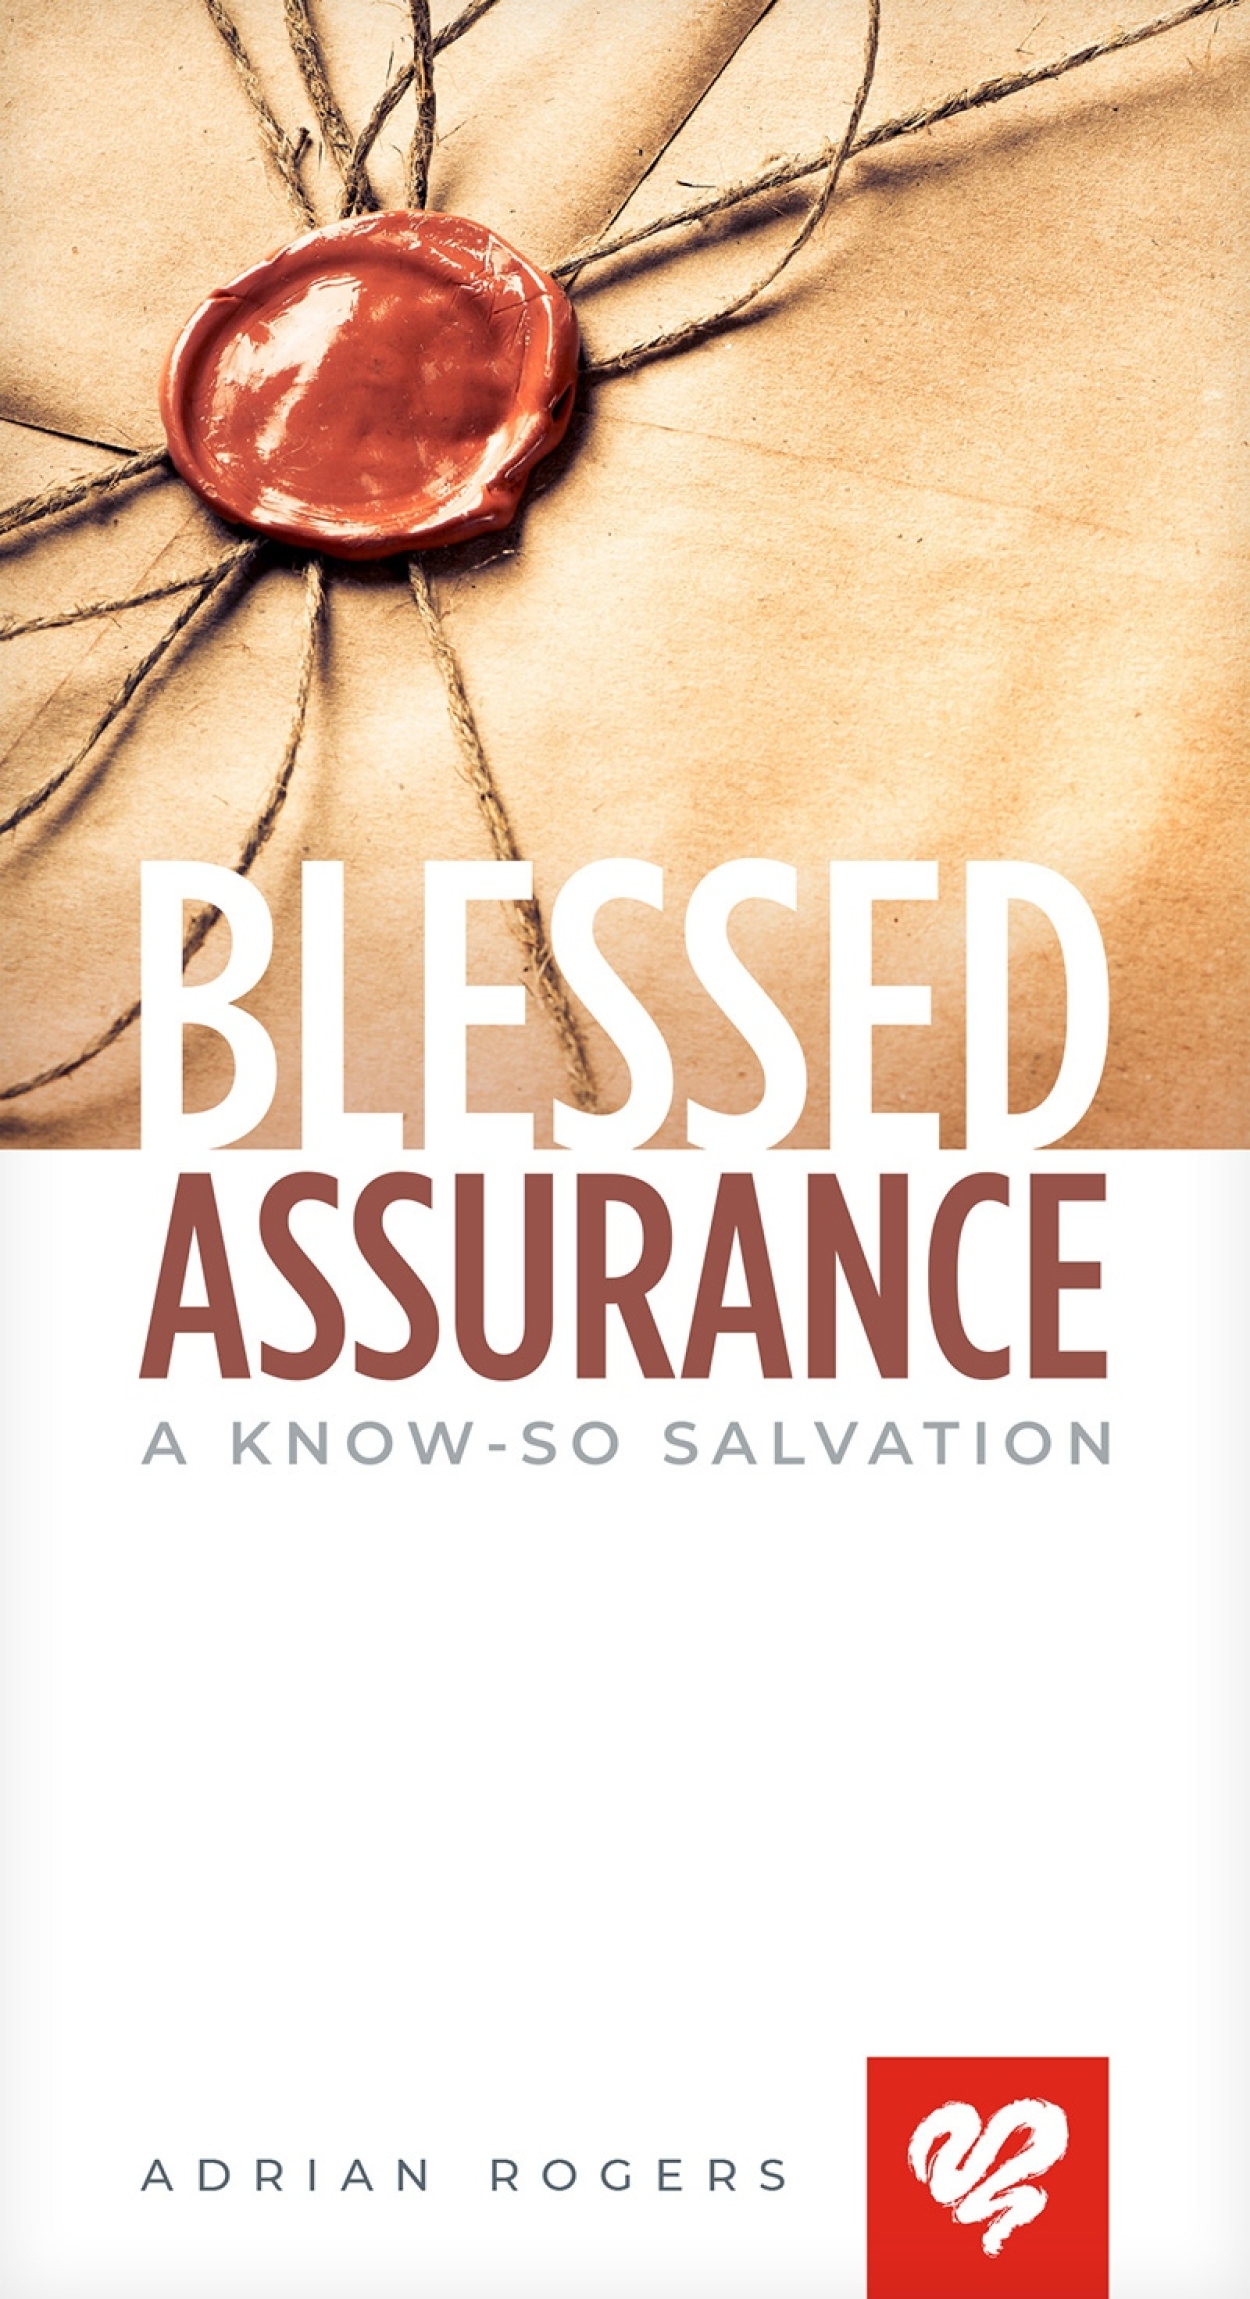 Blessed assurance booklet K121